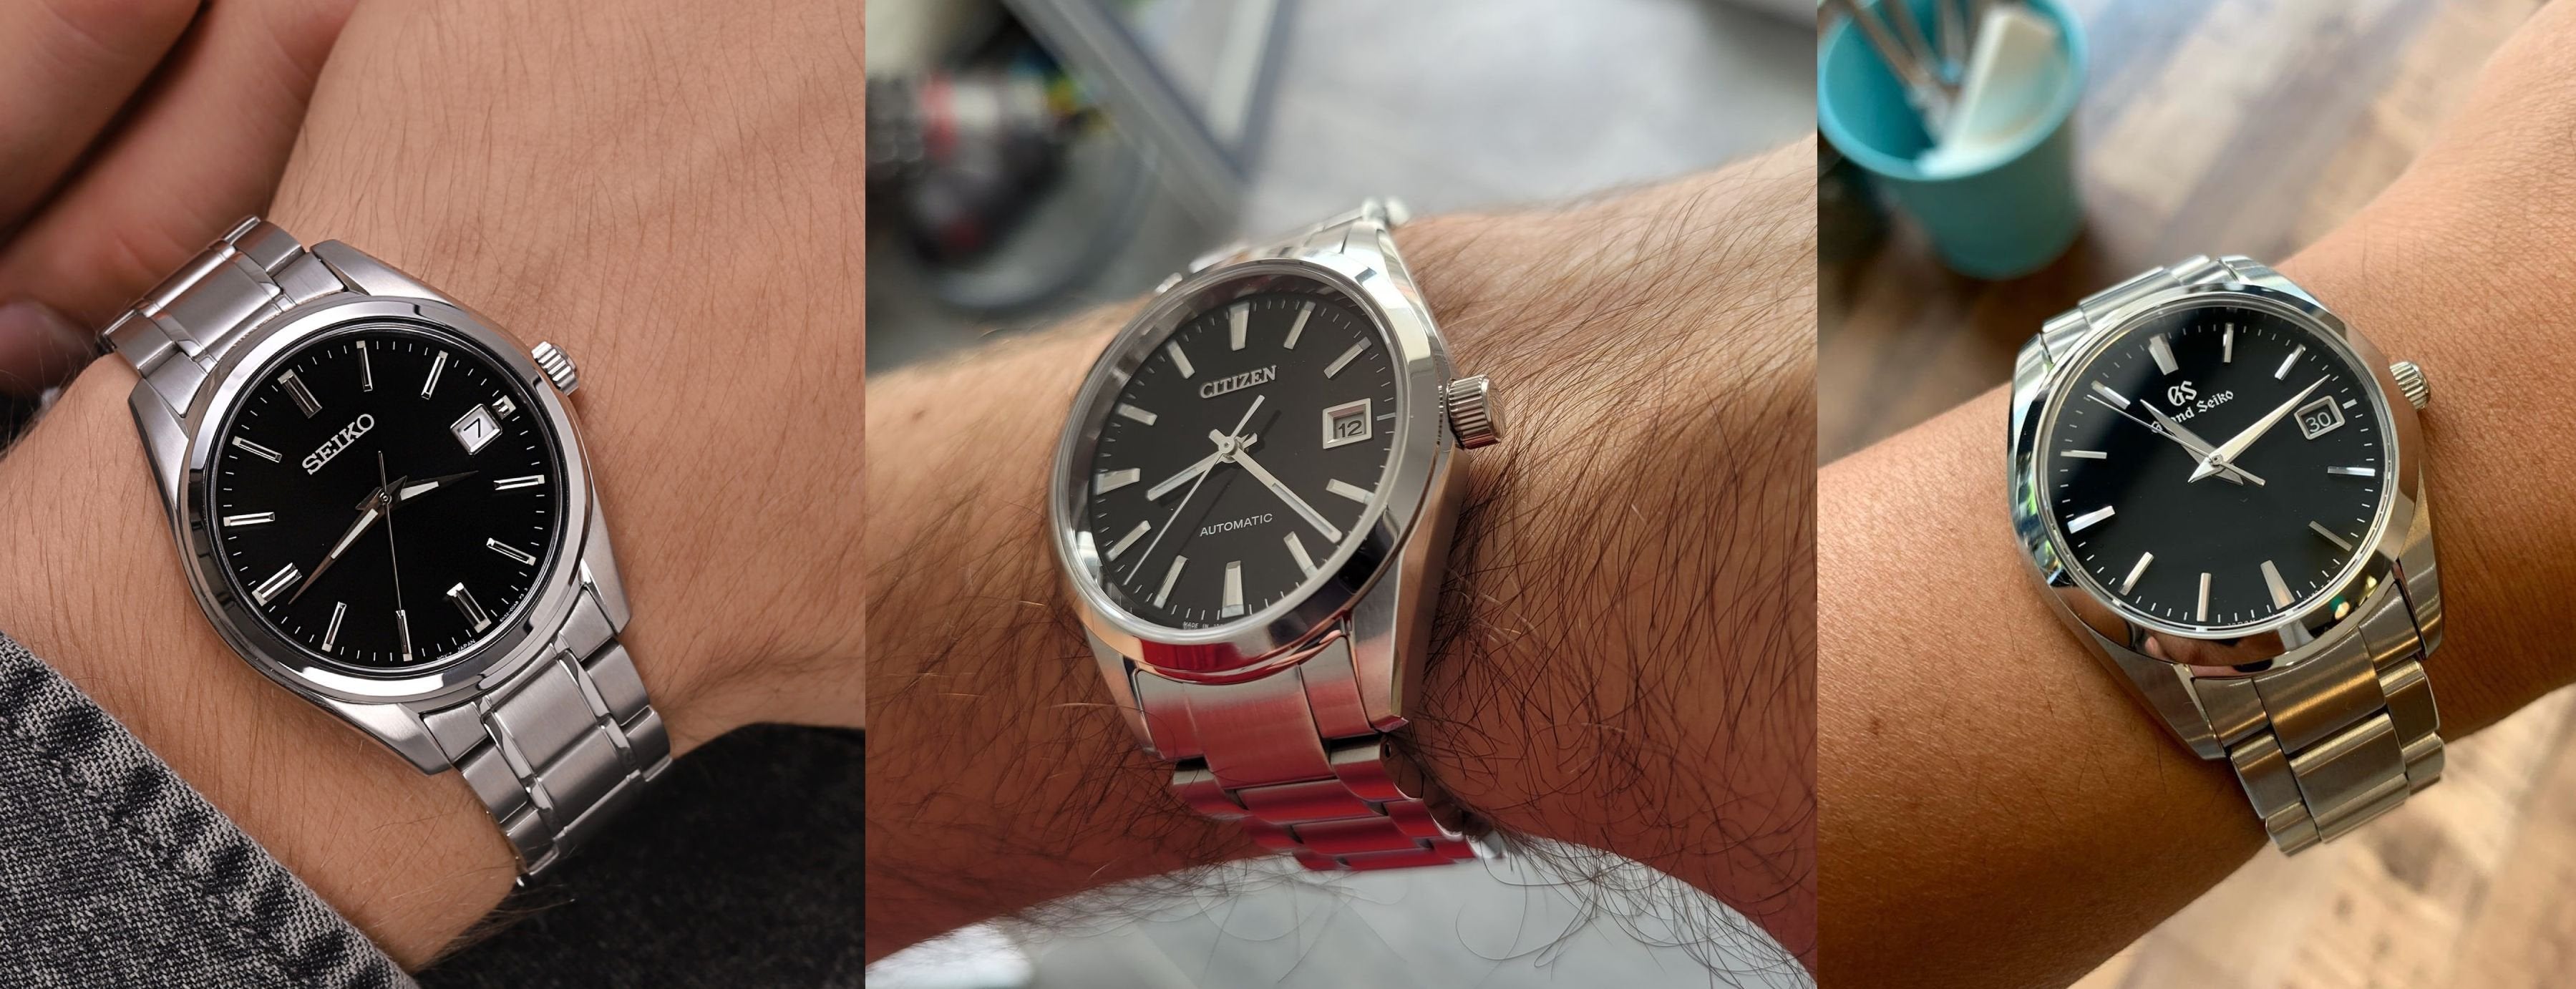 Please, help me between these 3 watches | WatchUSeek Watch